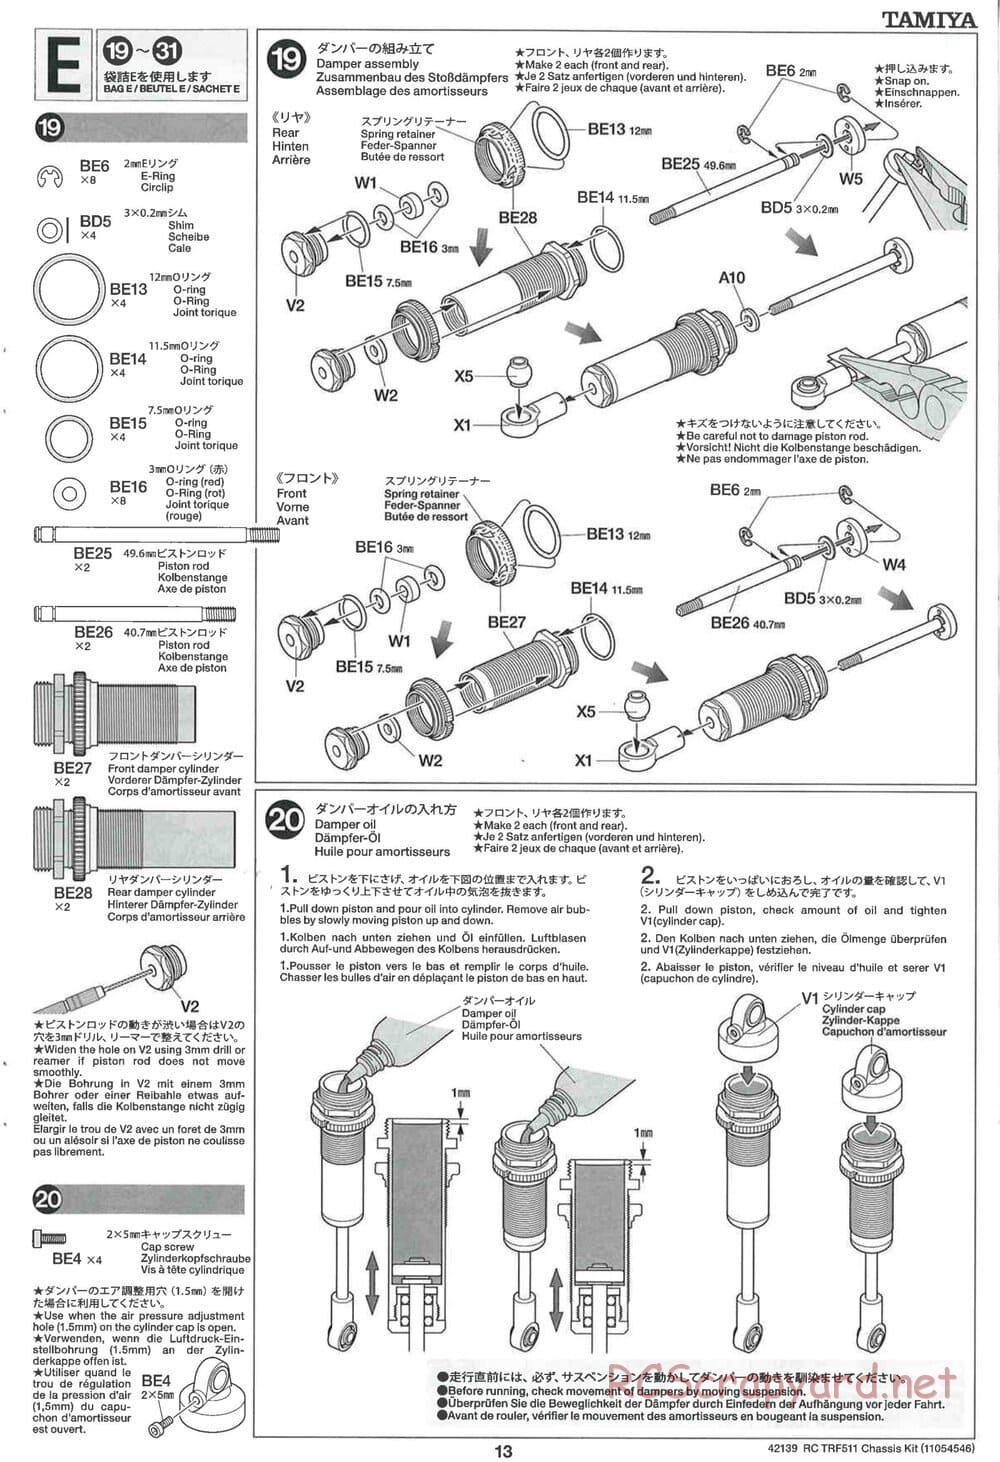 Tamiya - TRF511 Chassis - Manual - Page 13